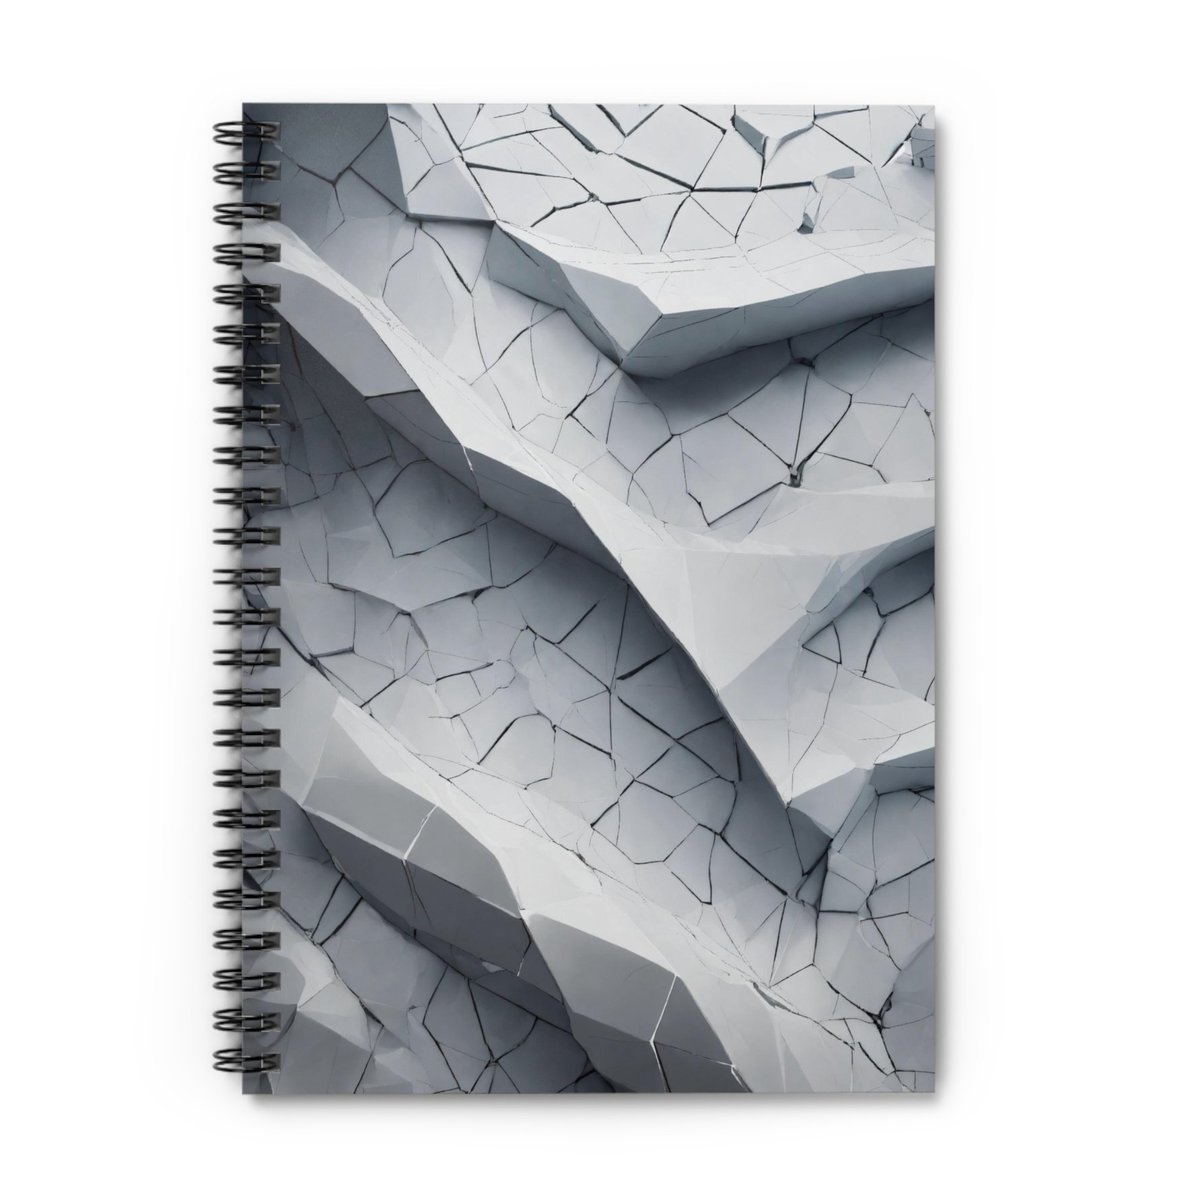 Printify Brand- Spiral Notebooks                 
#AIart #aiartist #AIArtwork #AI #spiralnotebook #notebook #aiartcommunity #aiimages #digitalart #digitalartwork